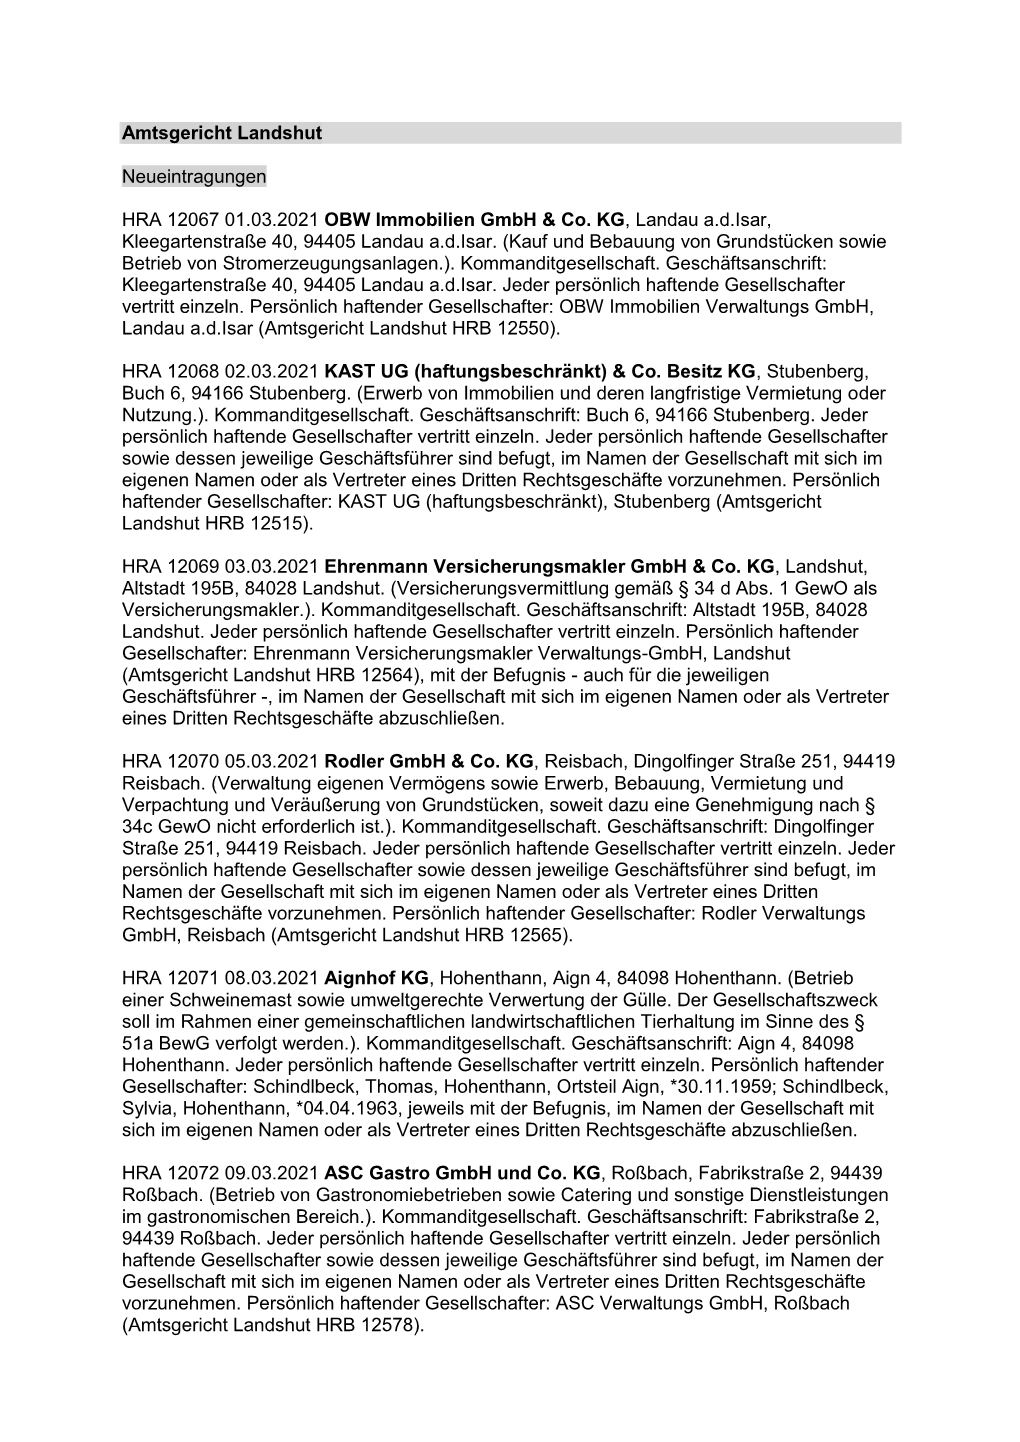 Handelsregister März 2021 Amtsgericht Landshut